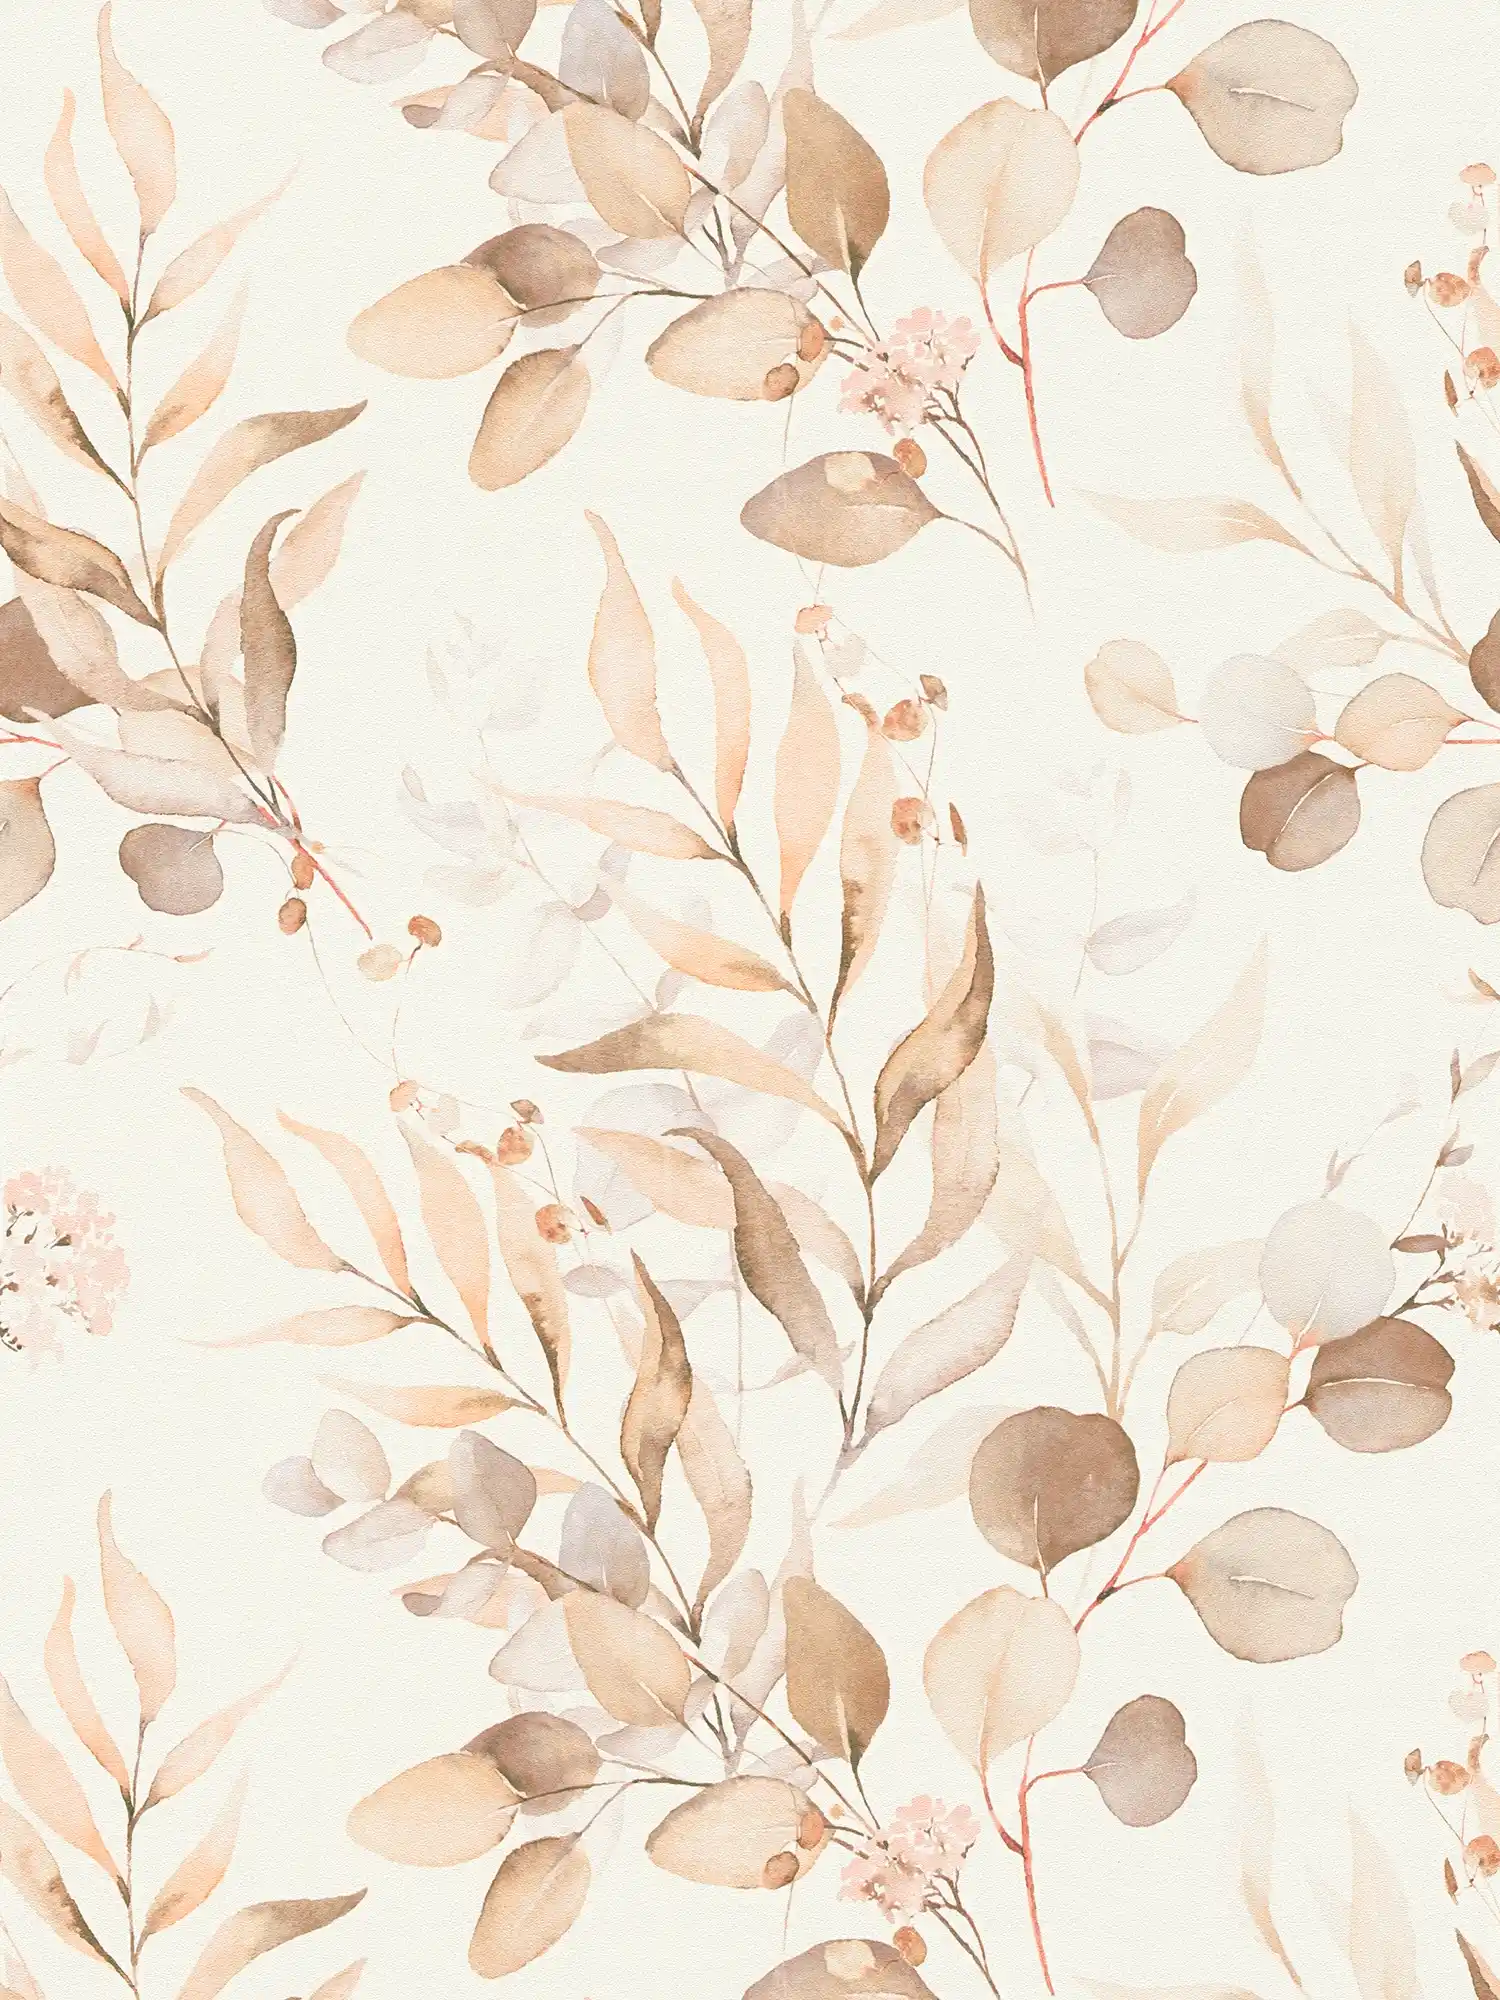 Non-woven wallpaper with watercolour leaf motif in warm tones - cream, beige
